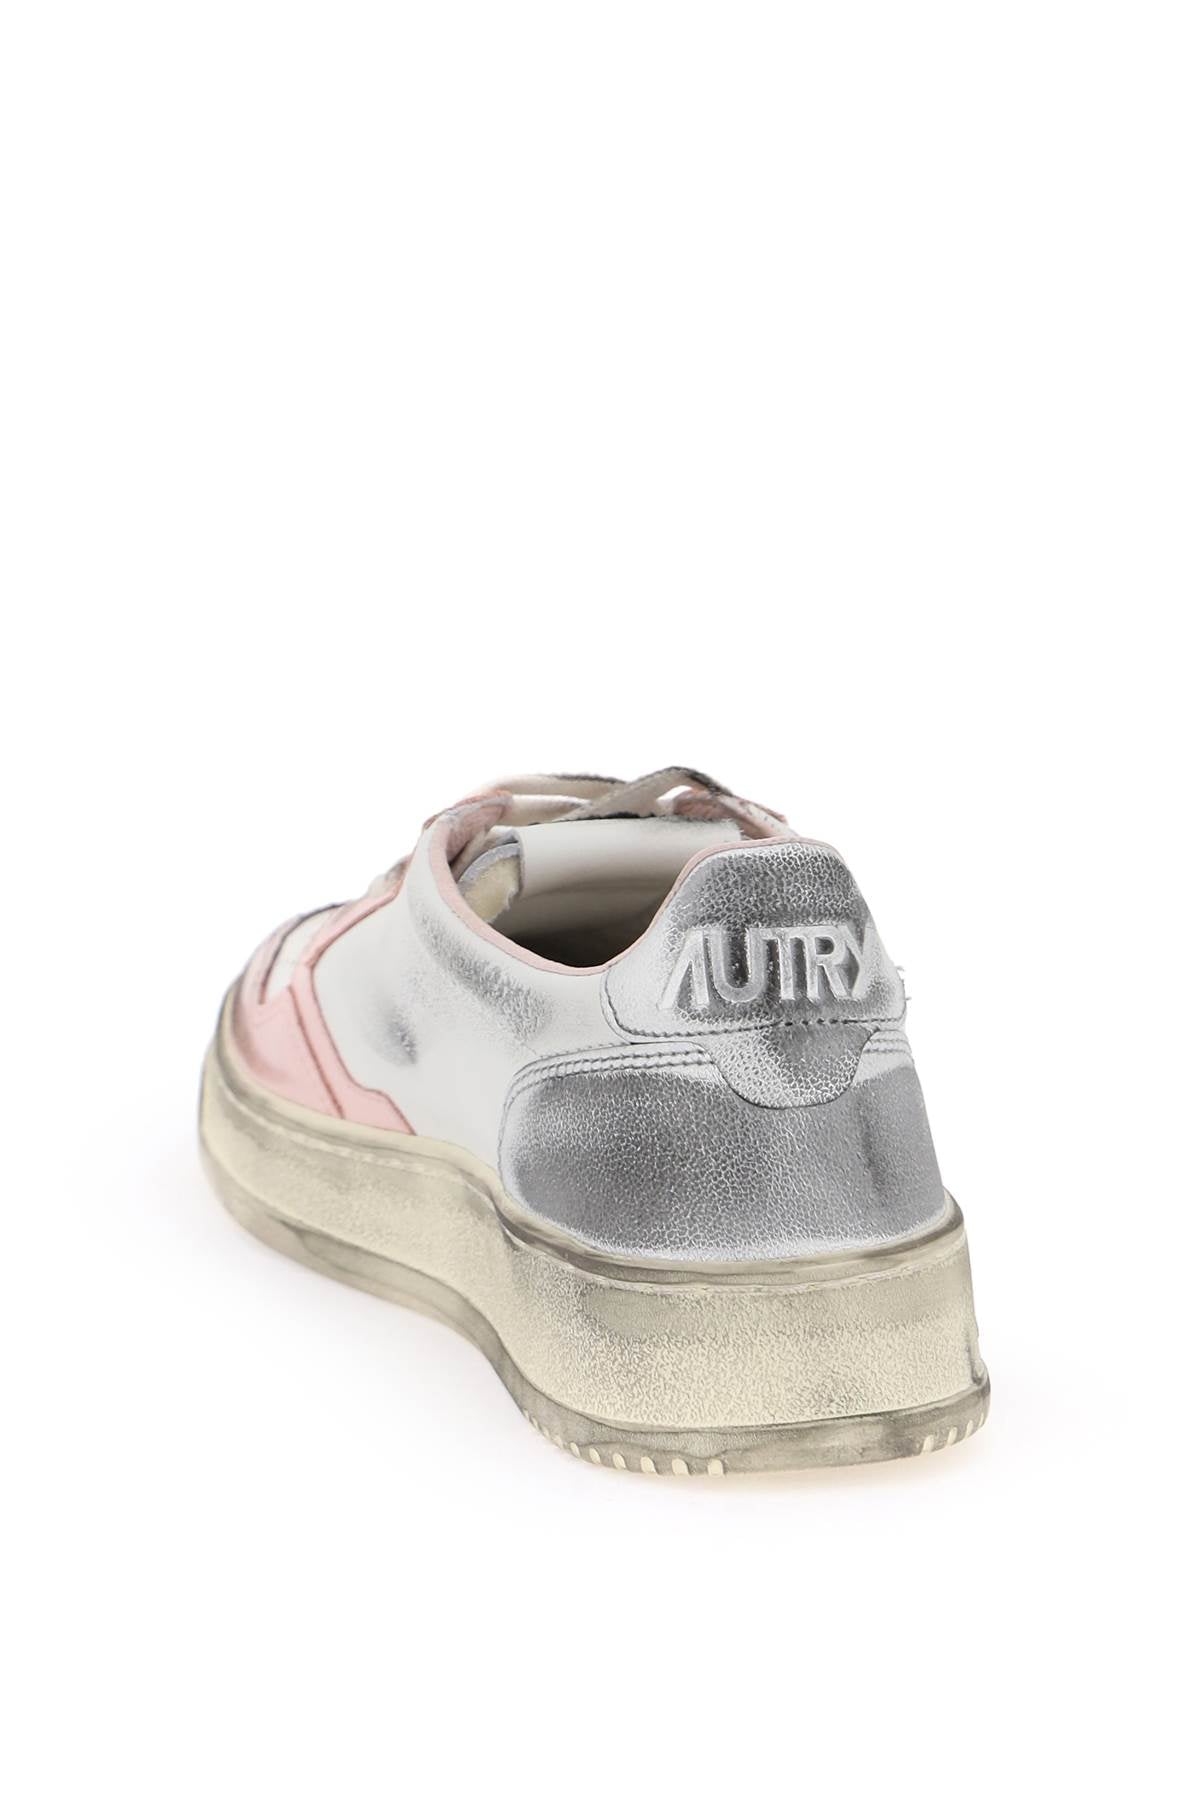 Autry medalist low super vintage sneakers-2